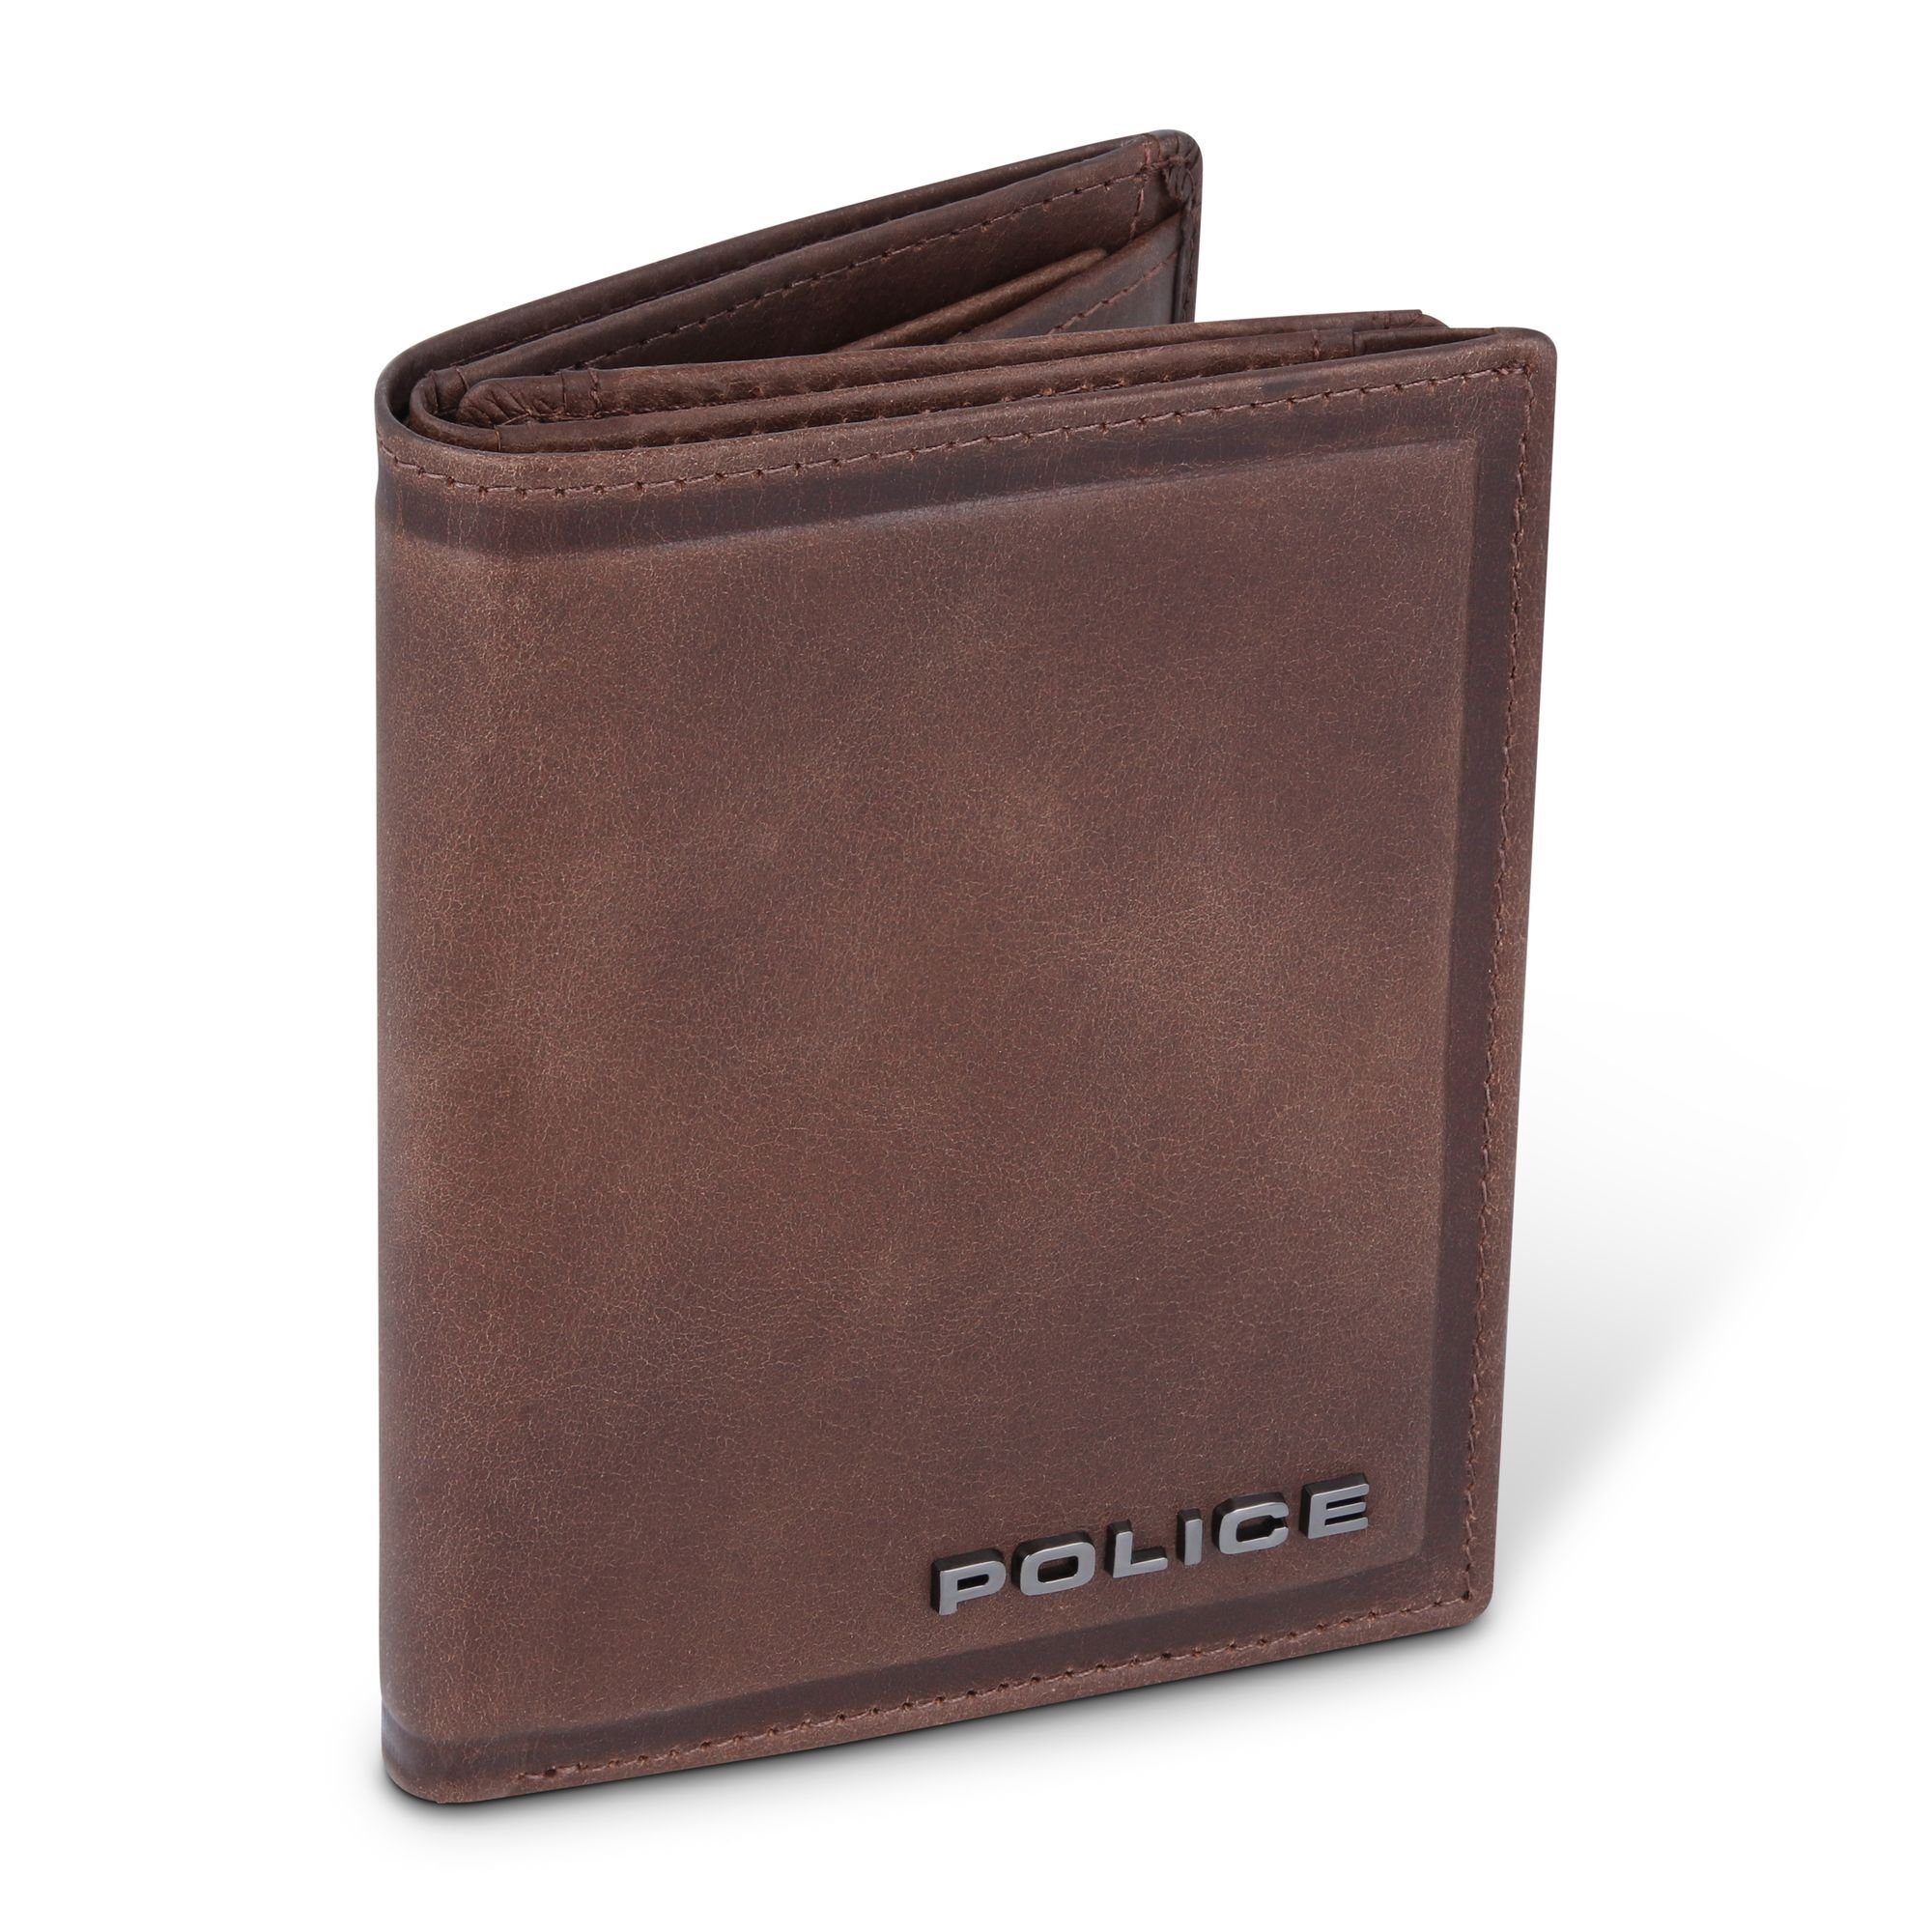 Police Geldbörse, Leder brown